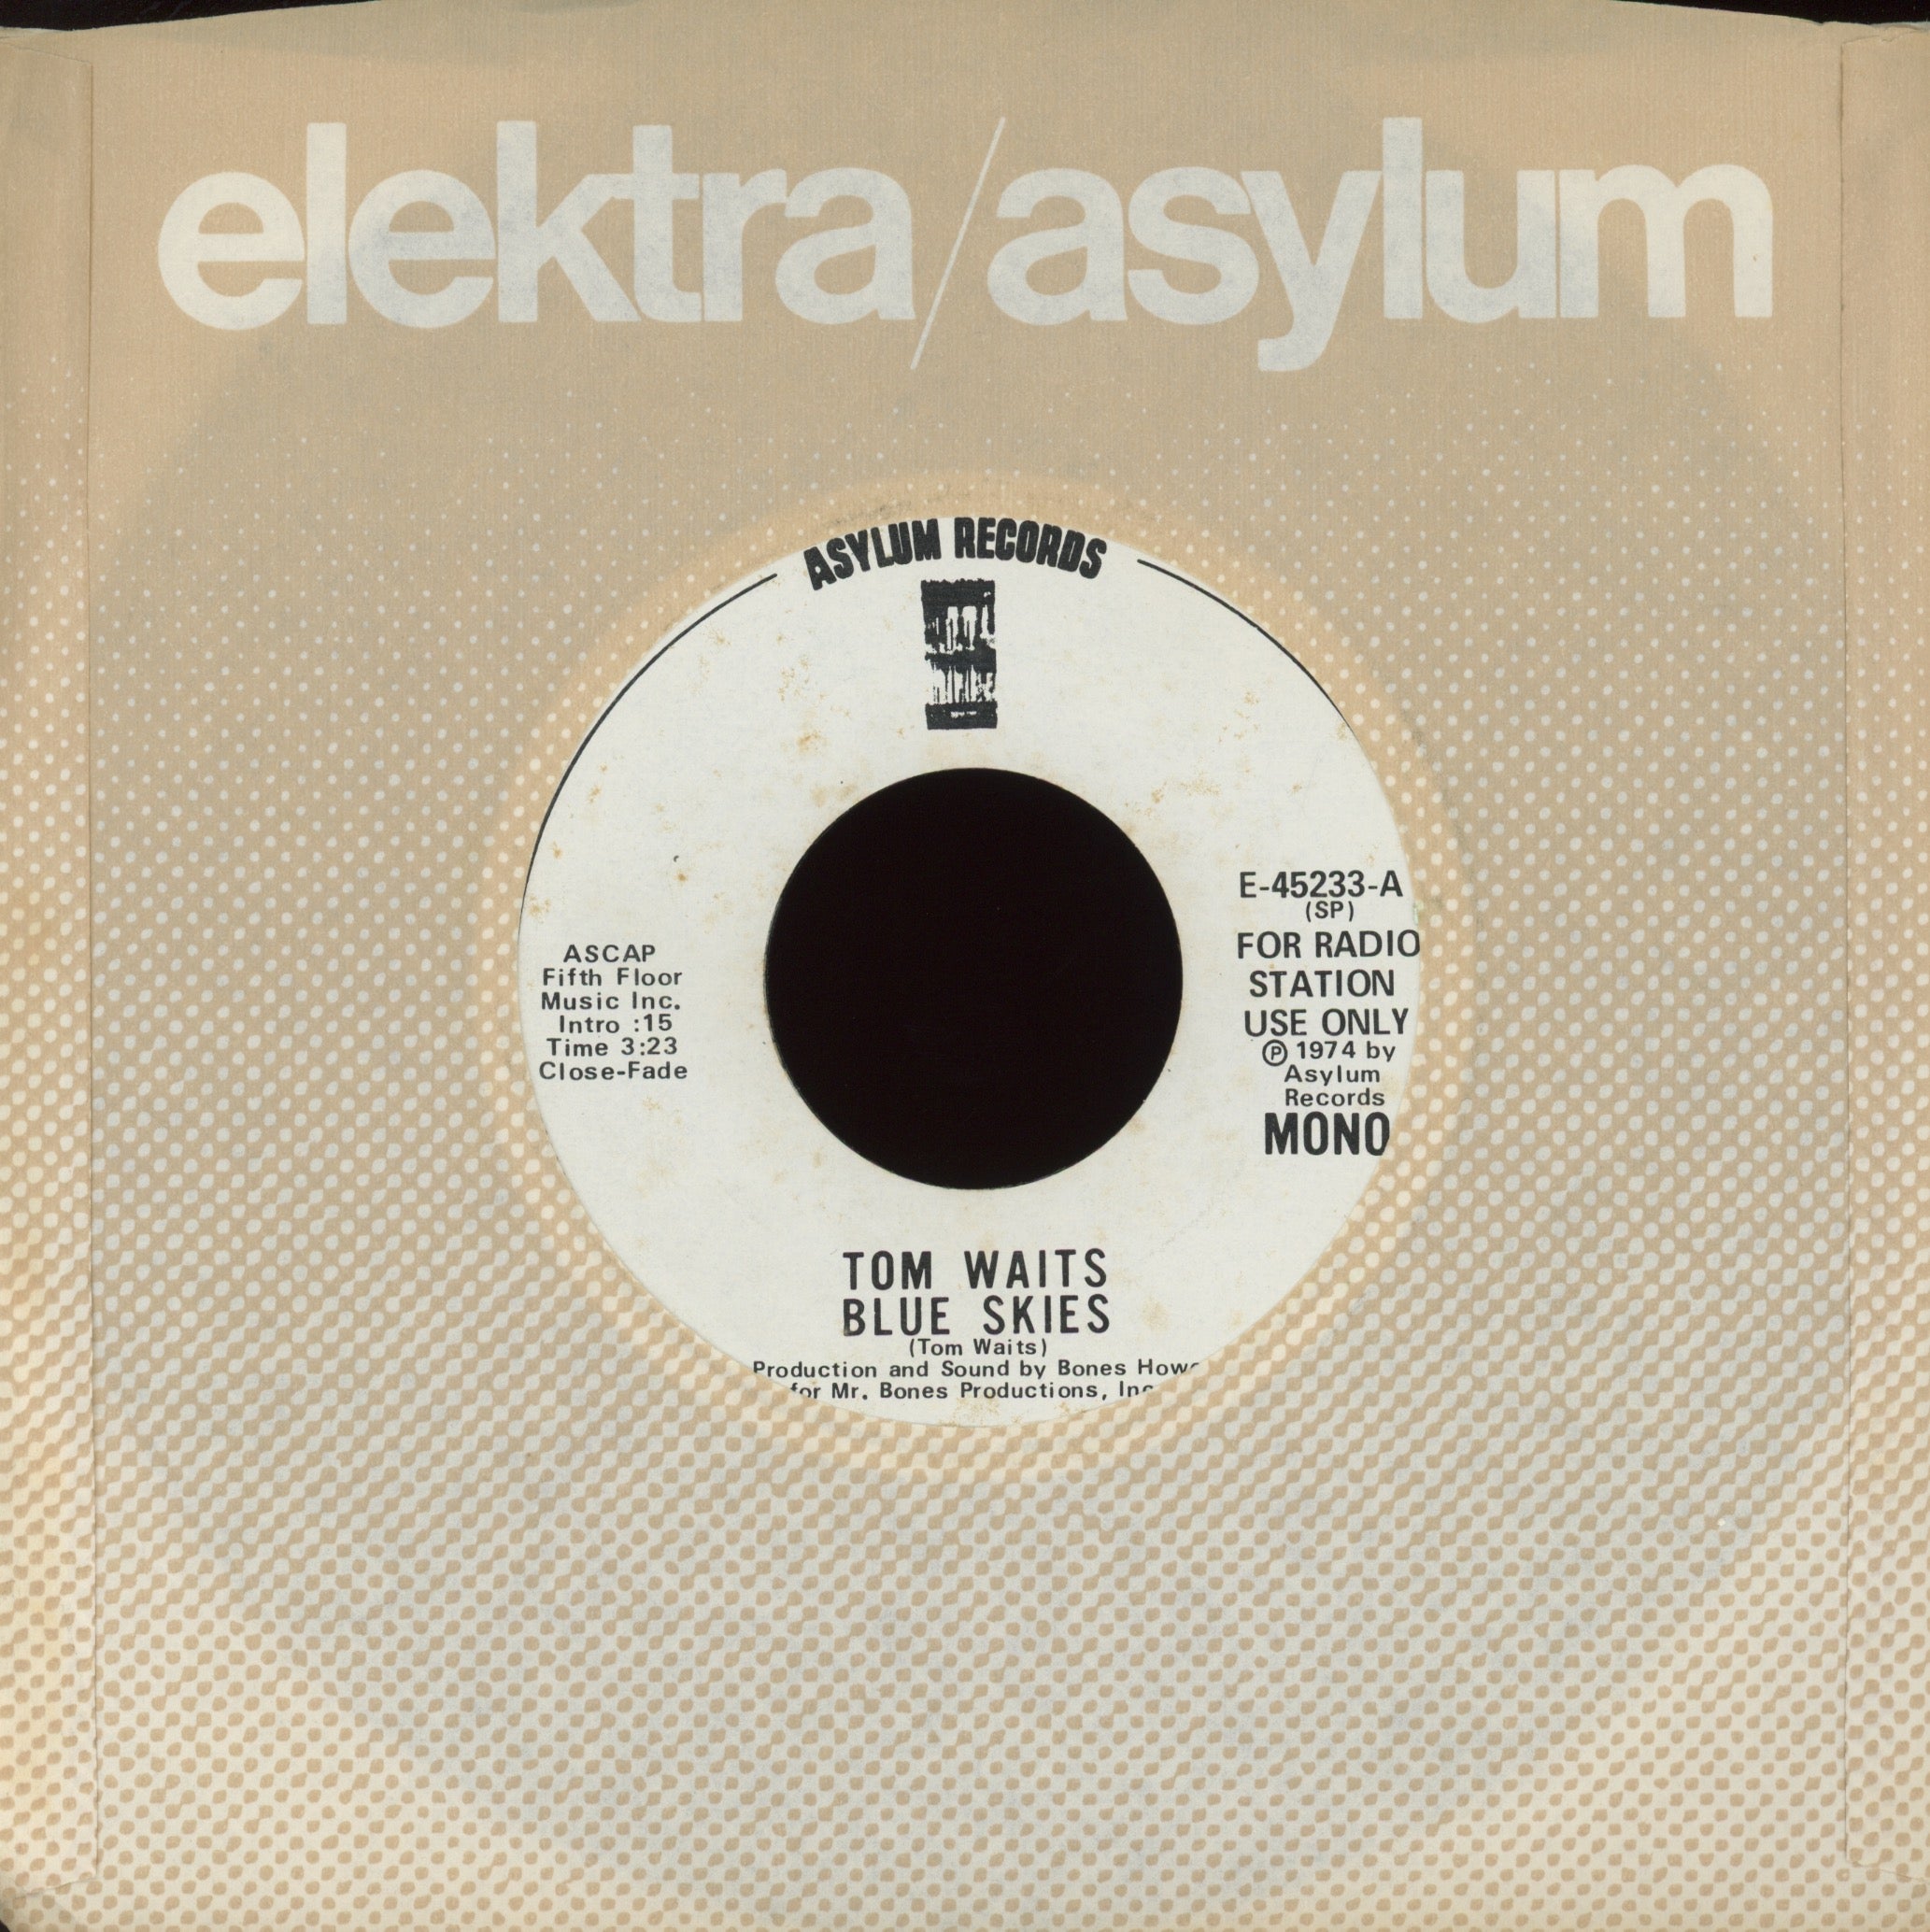 Tom Waits - Blue Skies on Asylum Promo 45